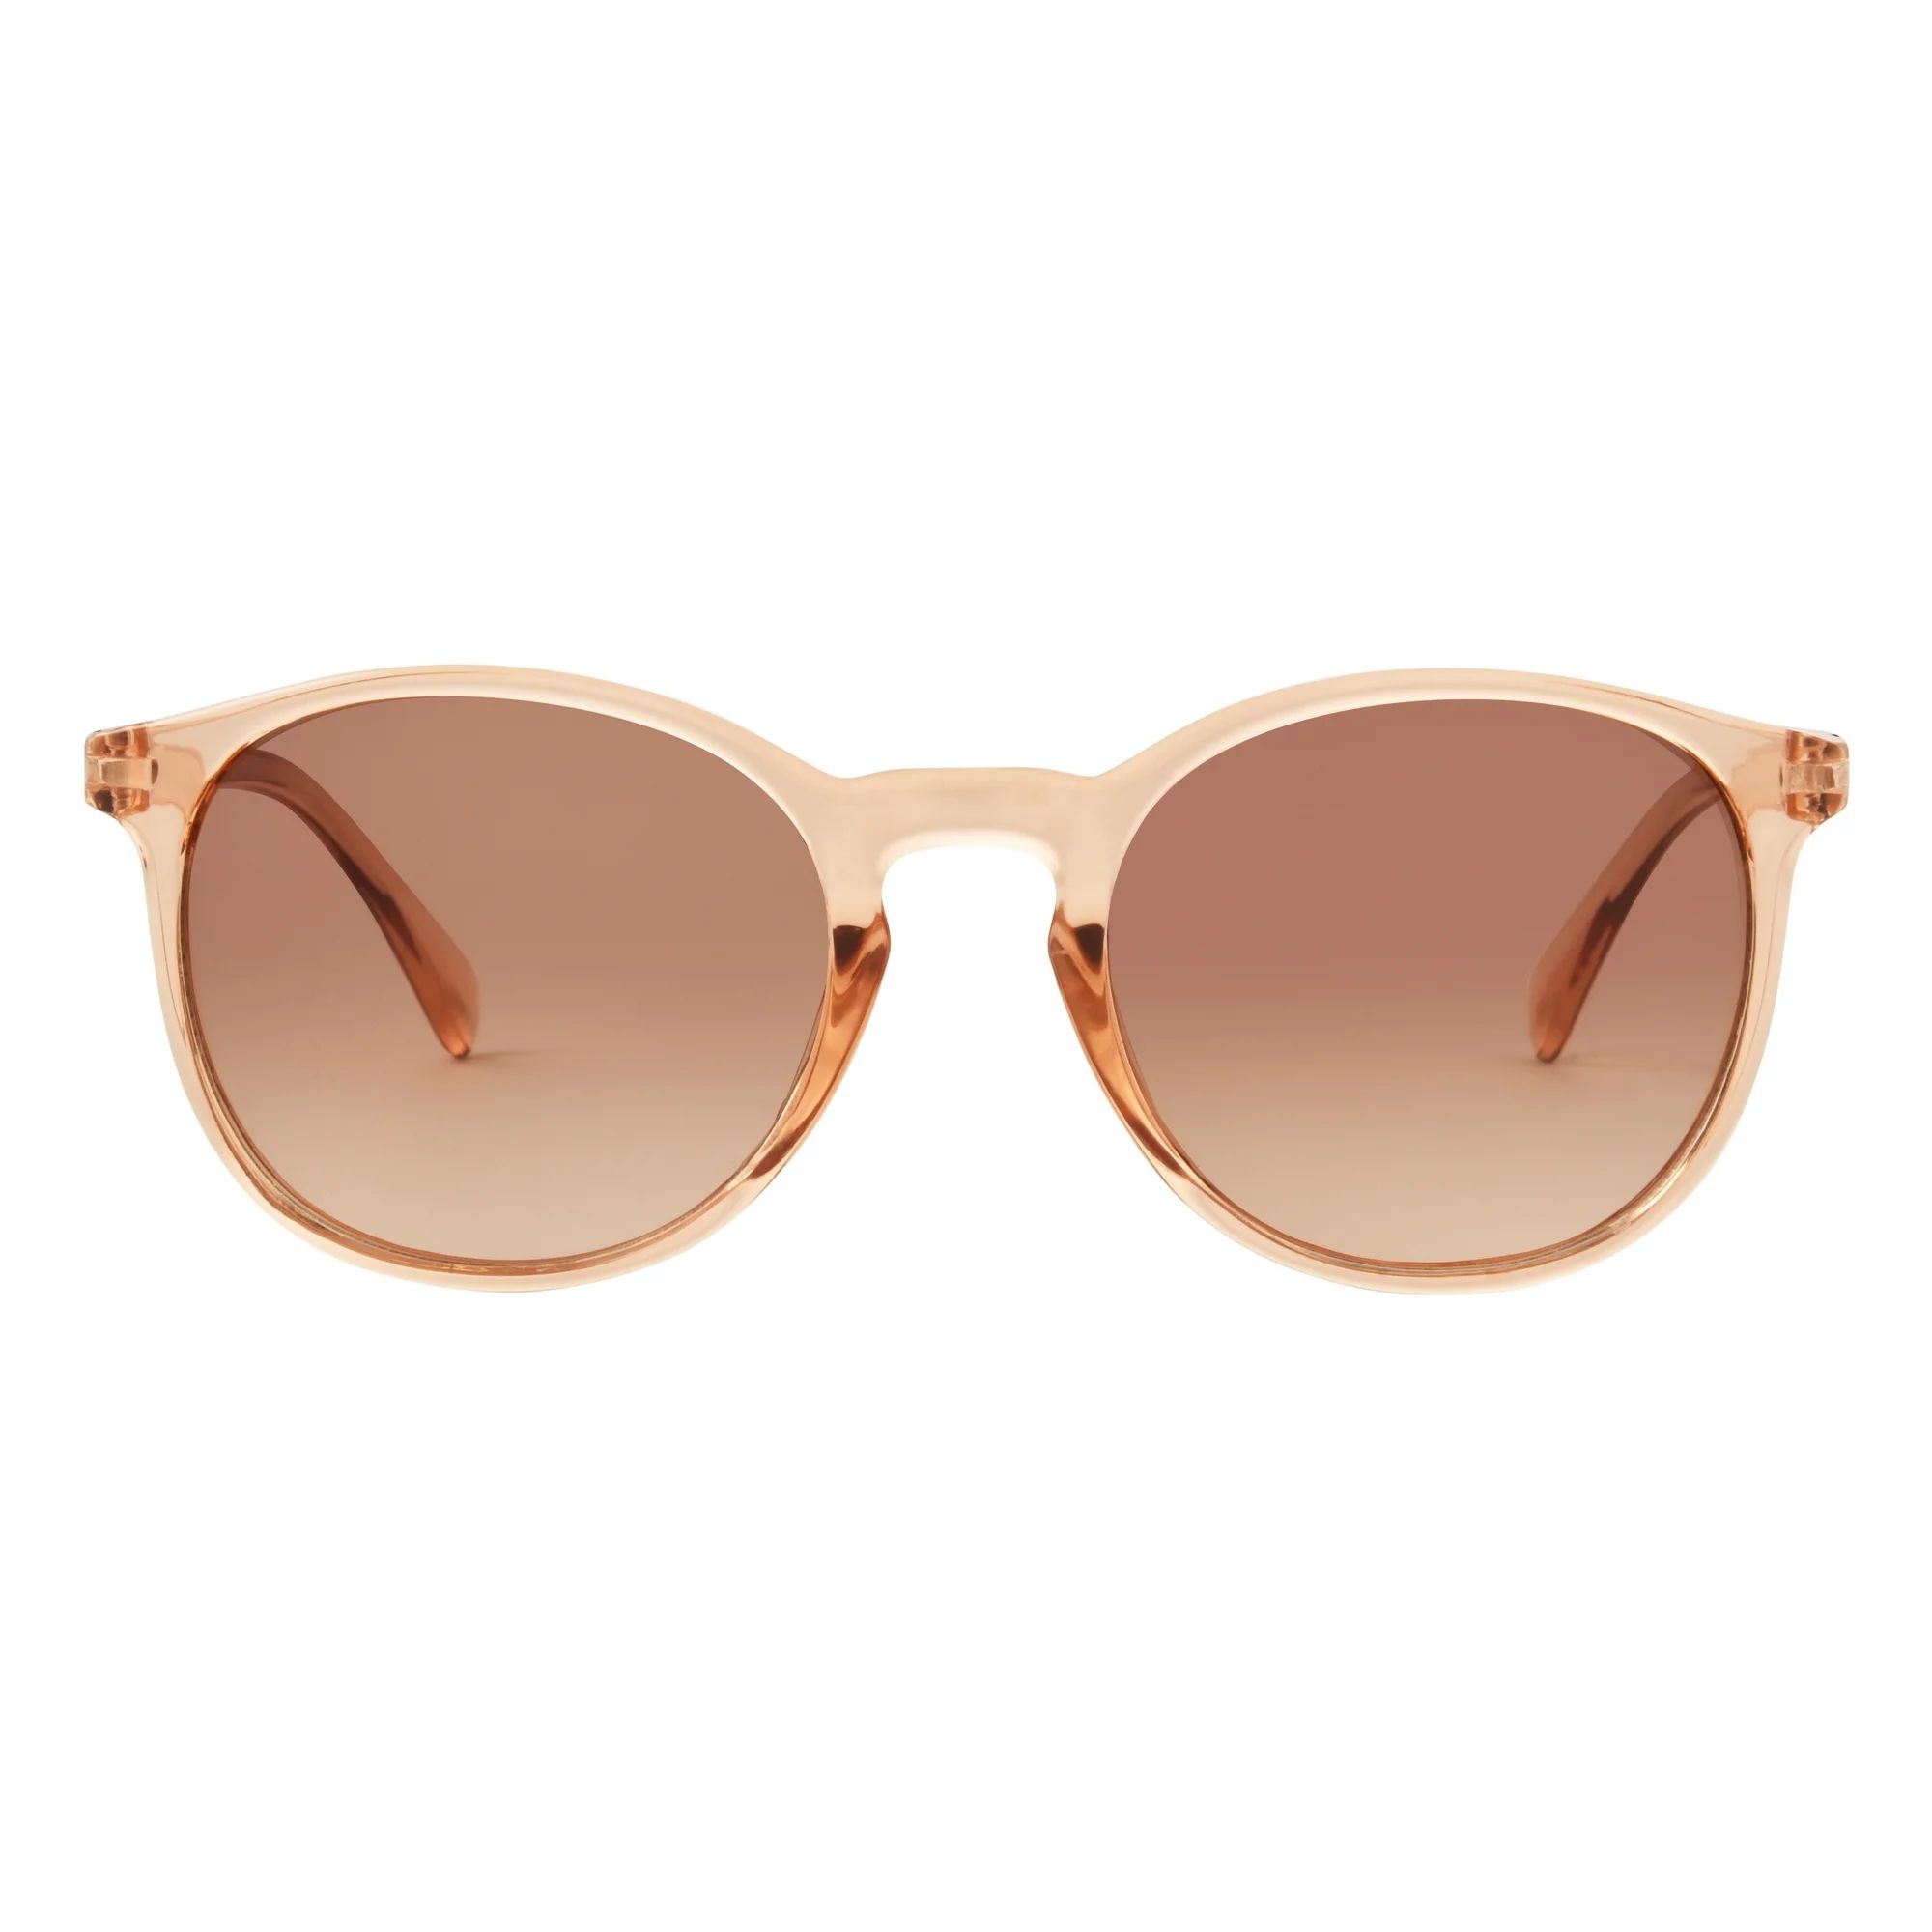 Sunsentials By Foster Grant Women's Round Sunglasses, Tan | Walmart (US)